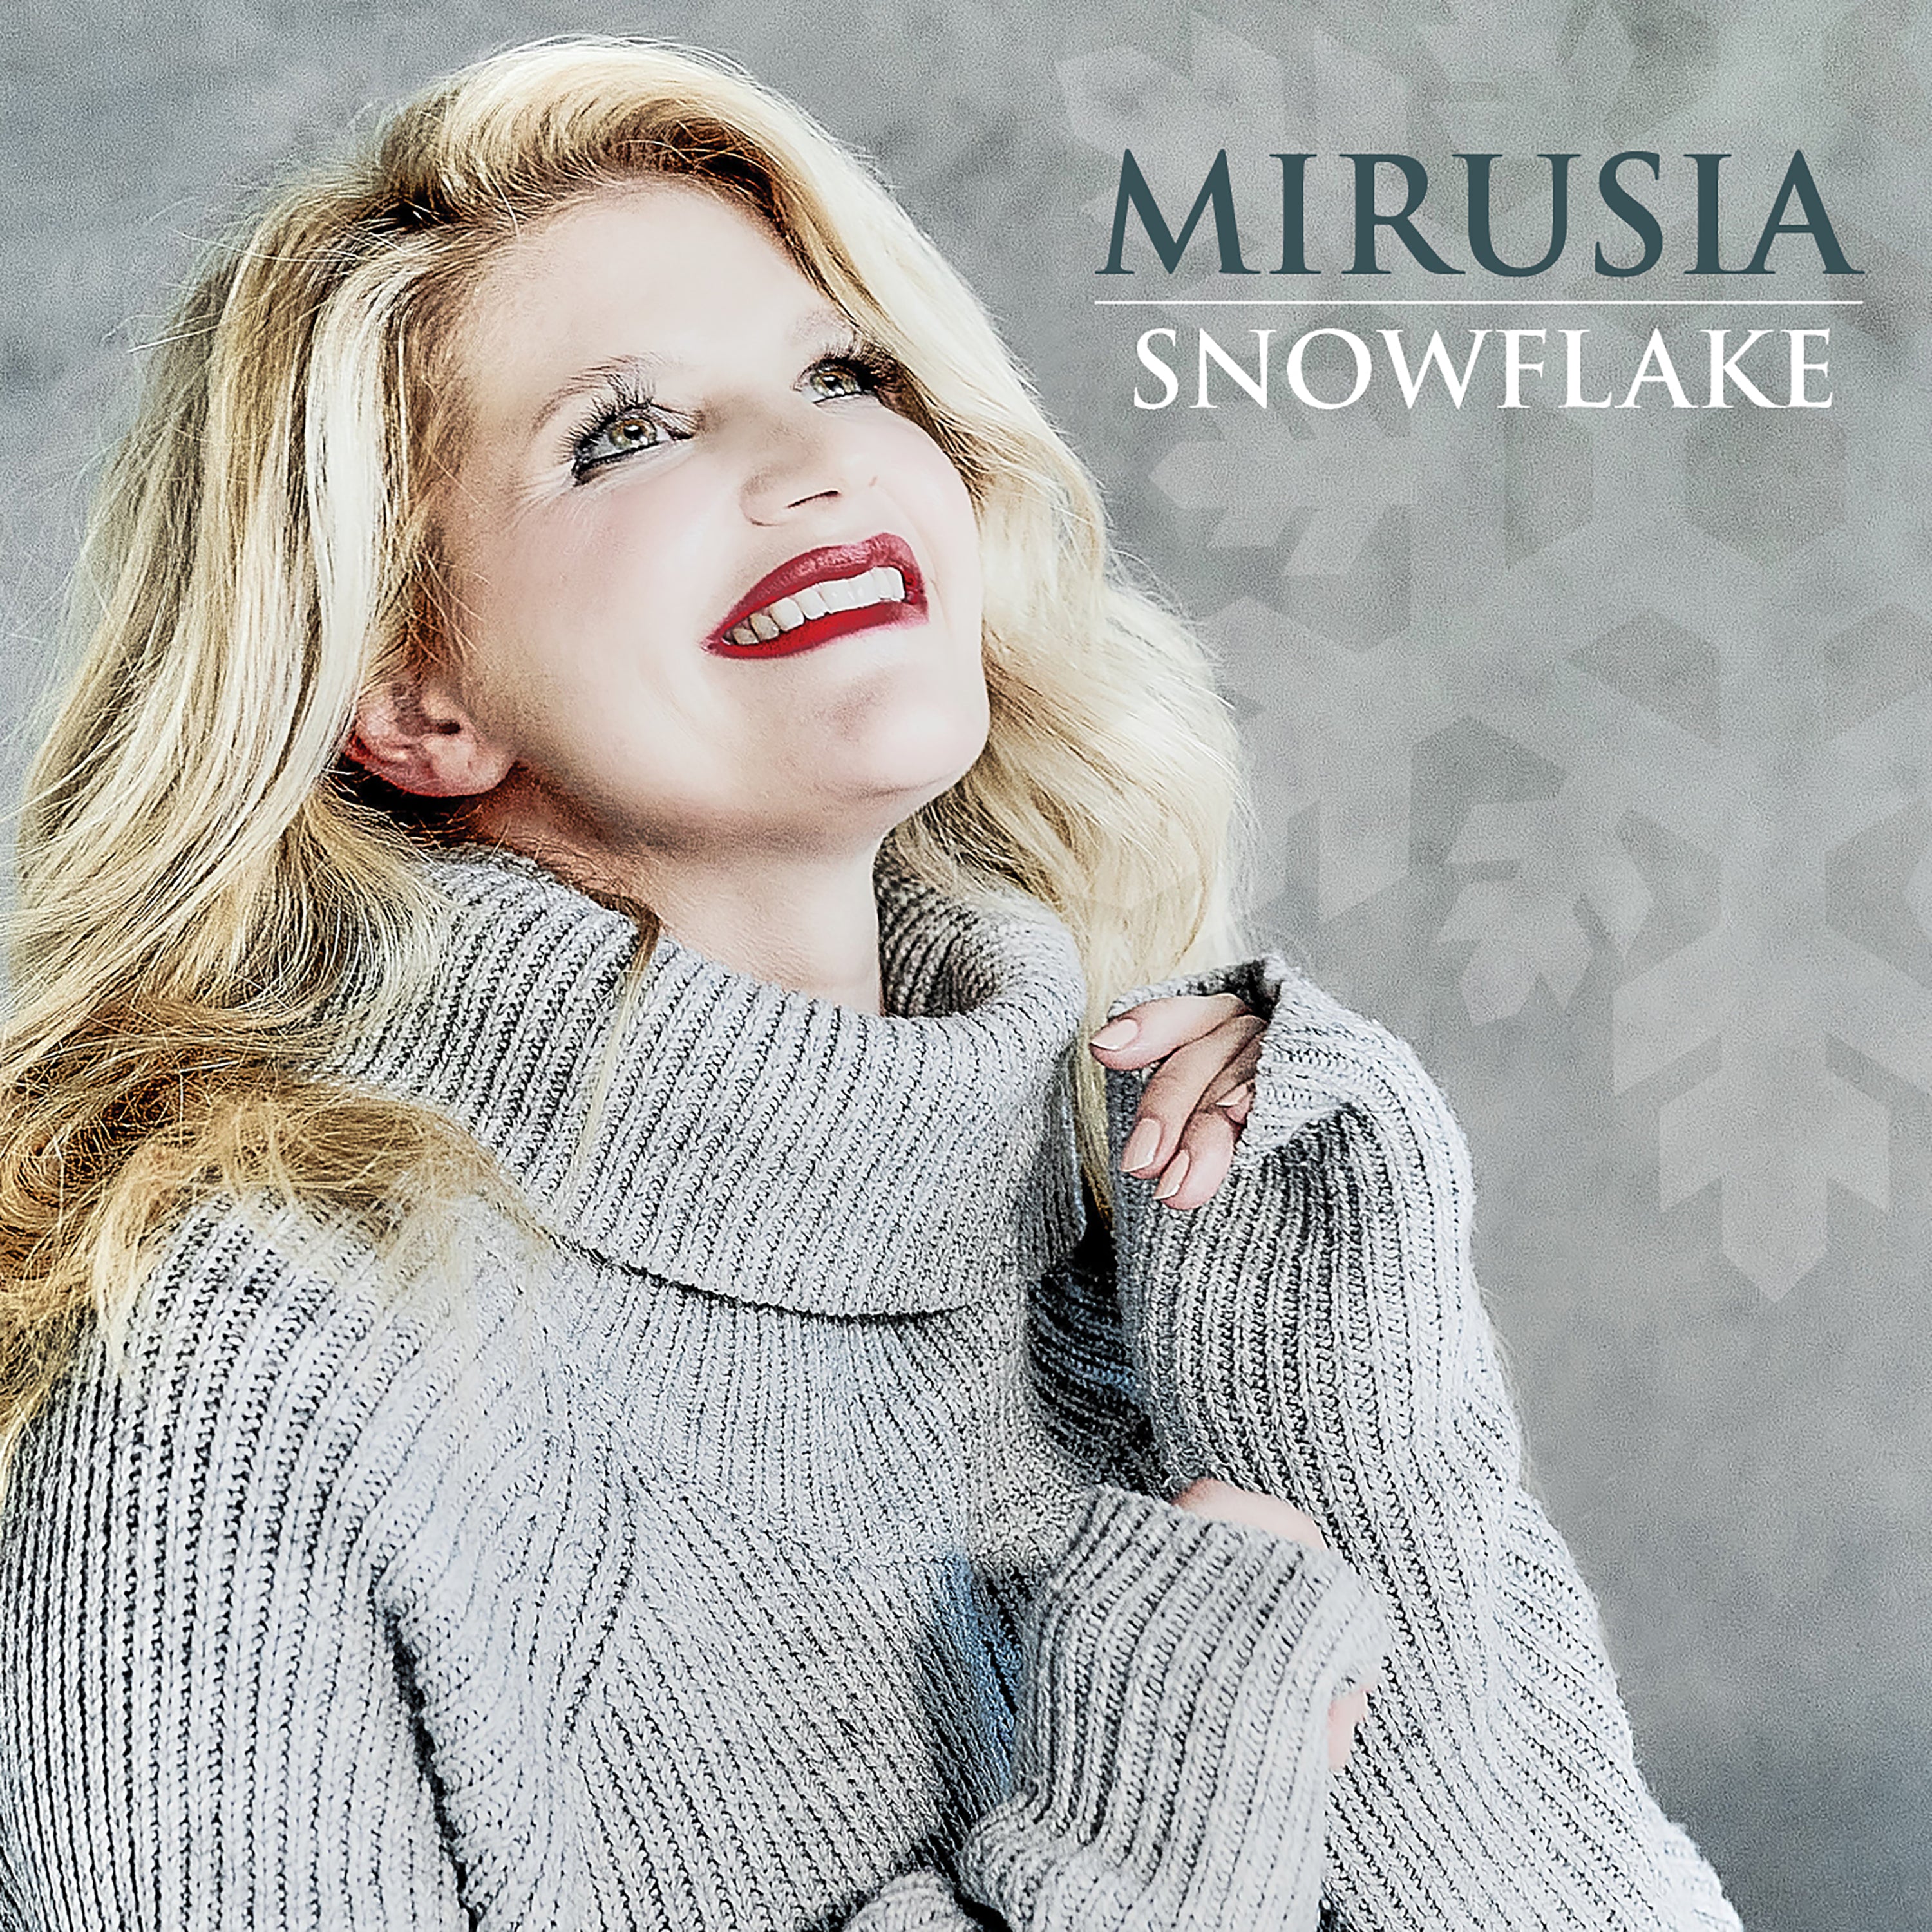 Mirusia's 'Snowflake' wins "Best Holiday Song" at Hollywood Music & Media Awards